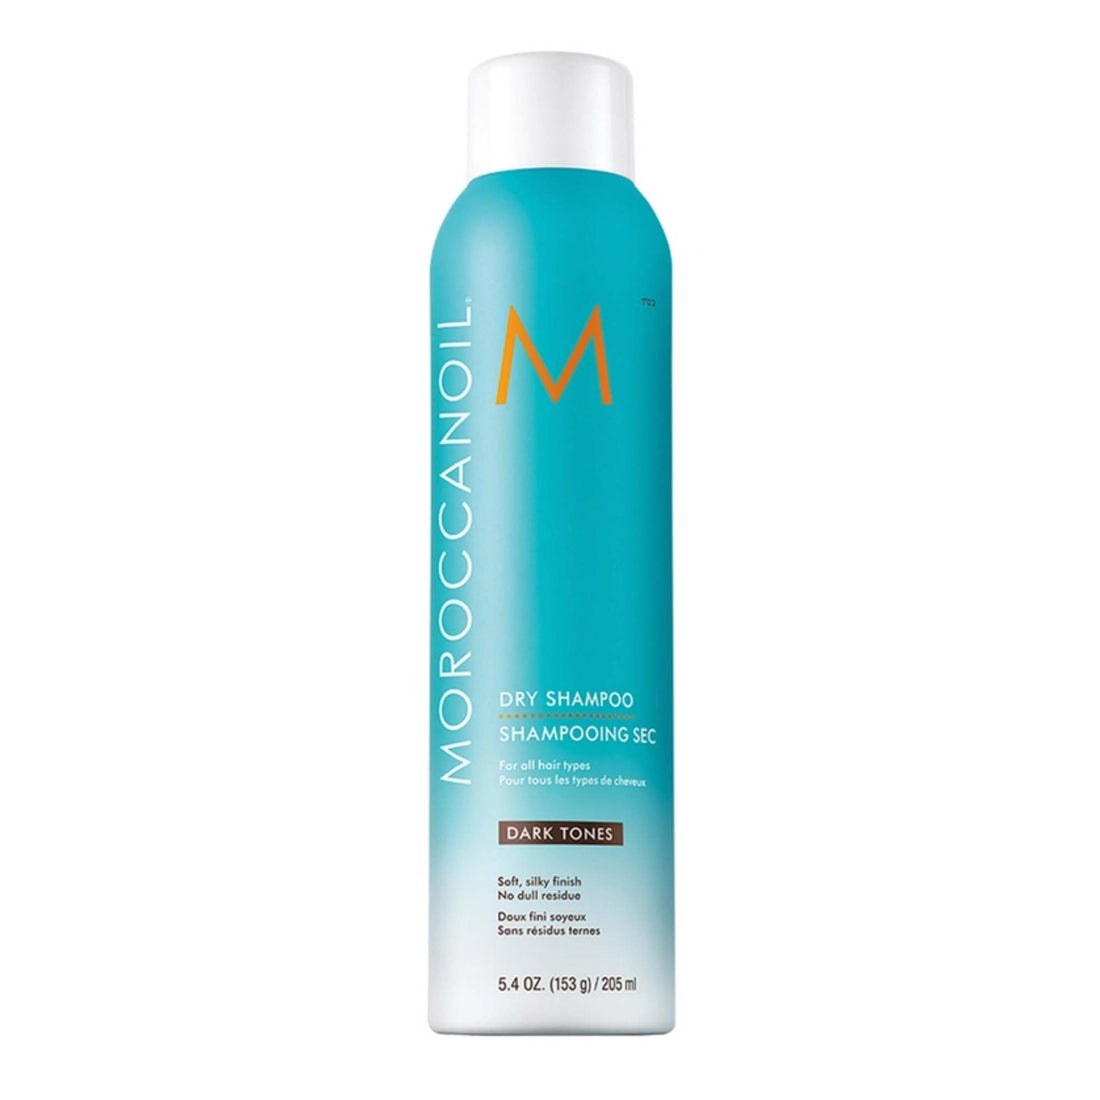 Morrocanoil Dry Shampoo Dark Tones (Limited Edition 45%) more 8.2oz